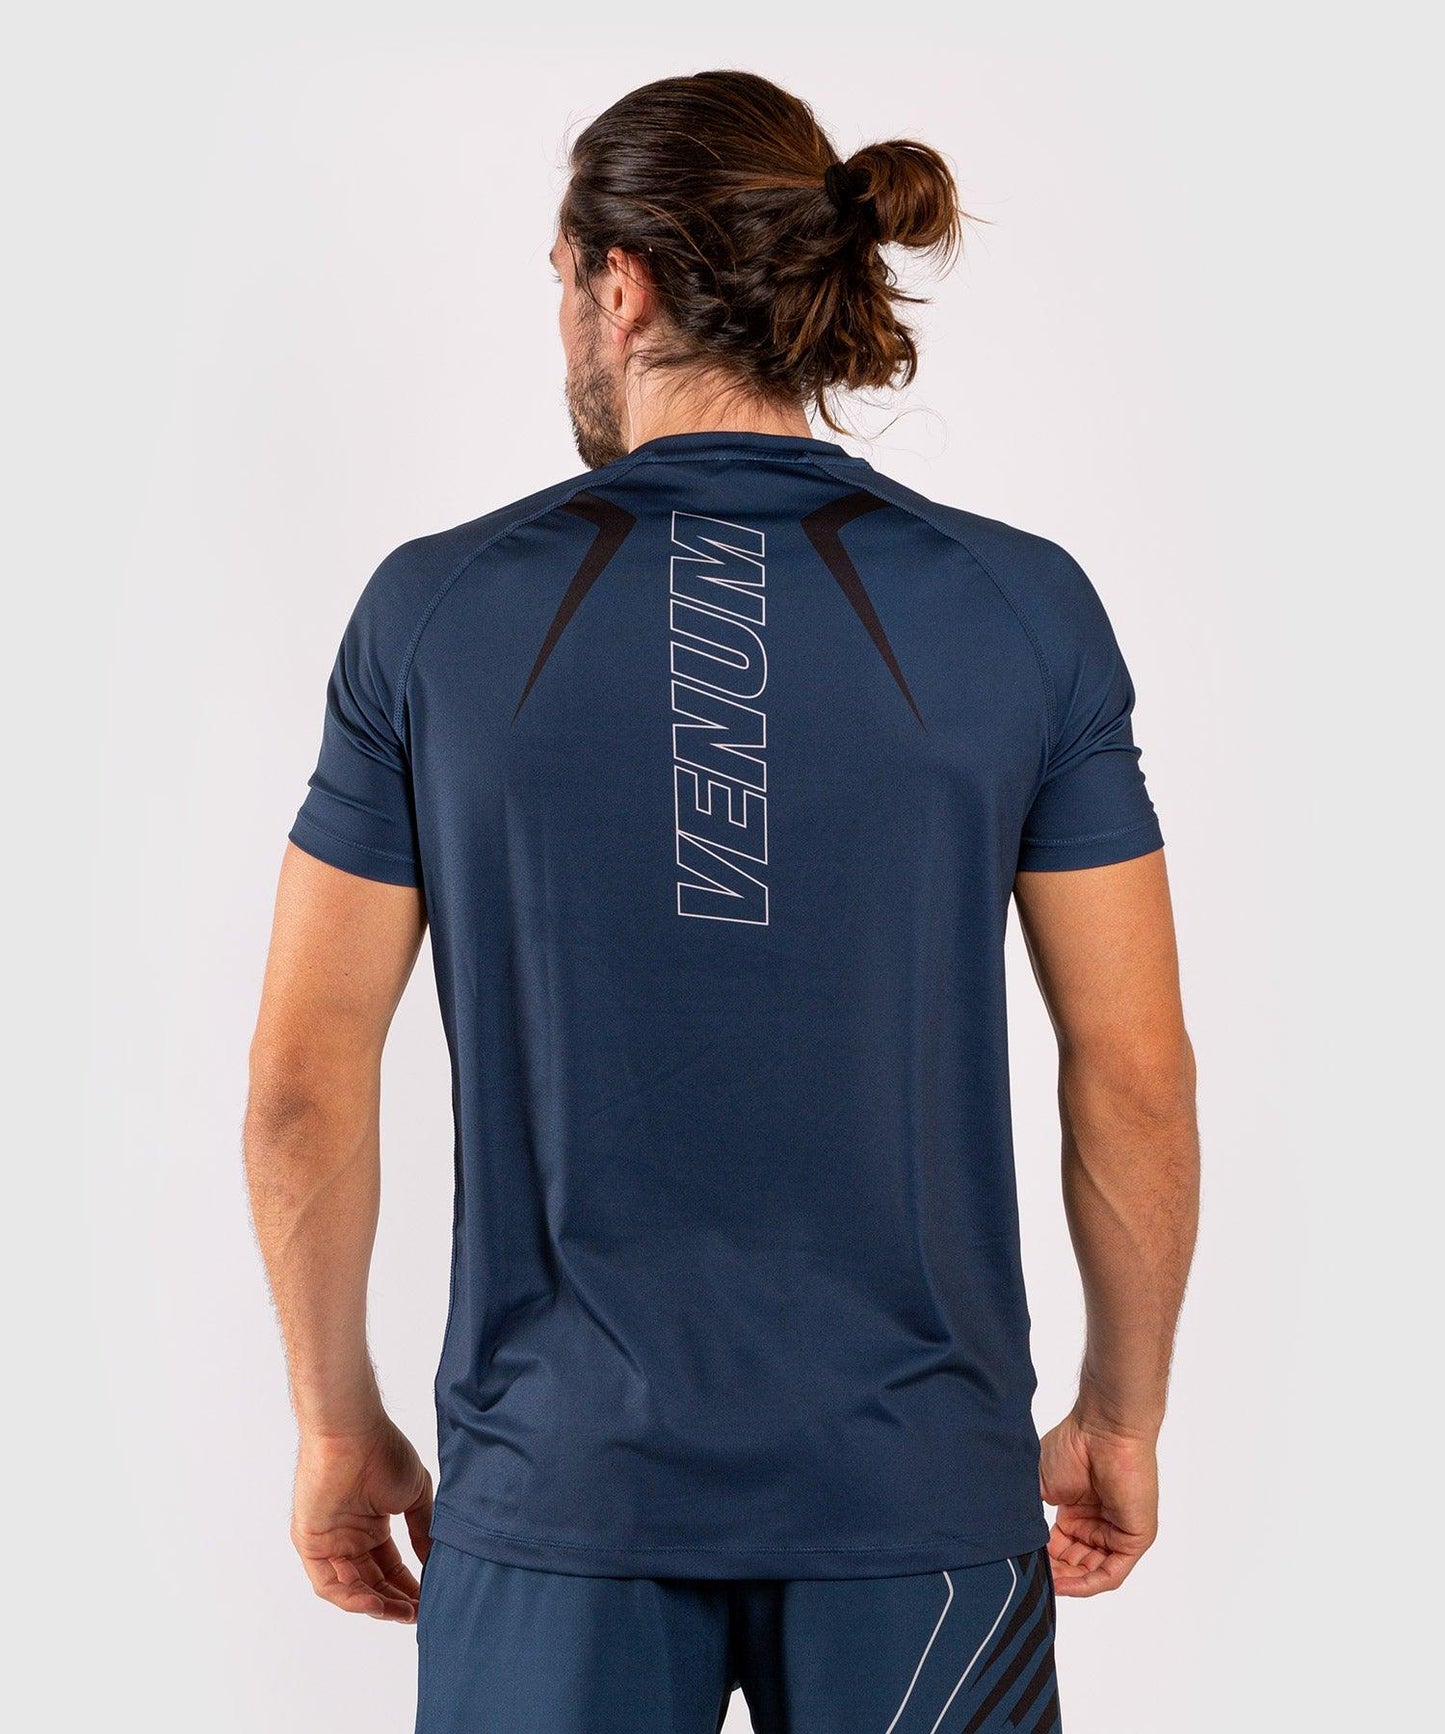 Venum Contender 5.0 Dry-Tech T-shirt - Navy/Sand Picture 2